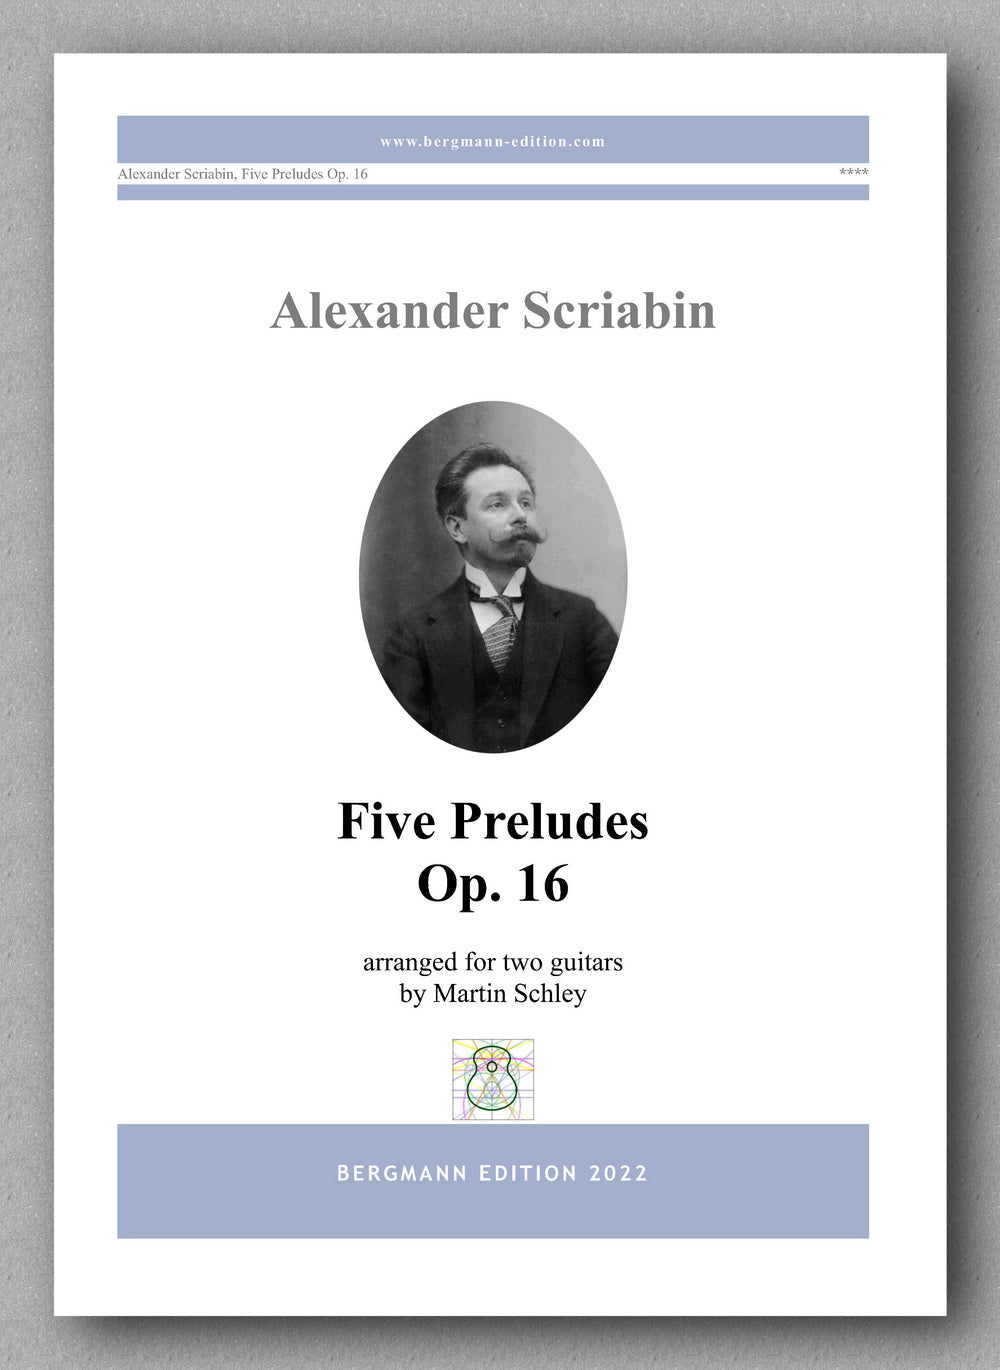 Alexander Scriabin, Five Preludes - Preview of the cover